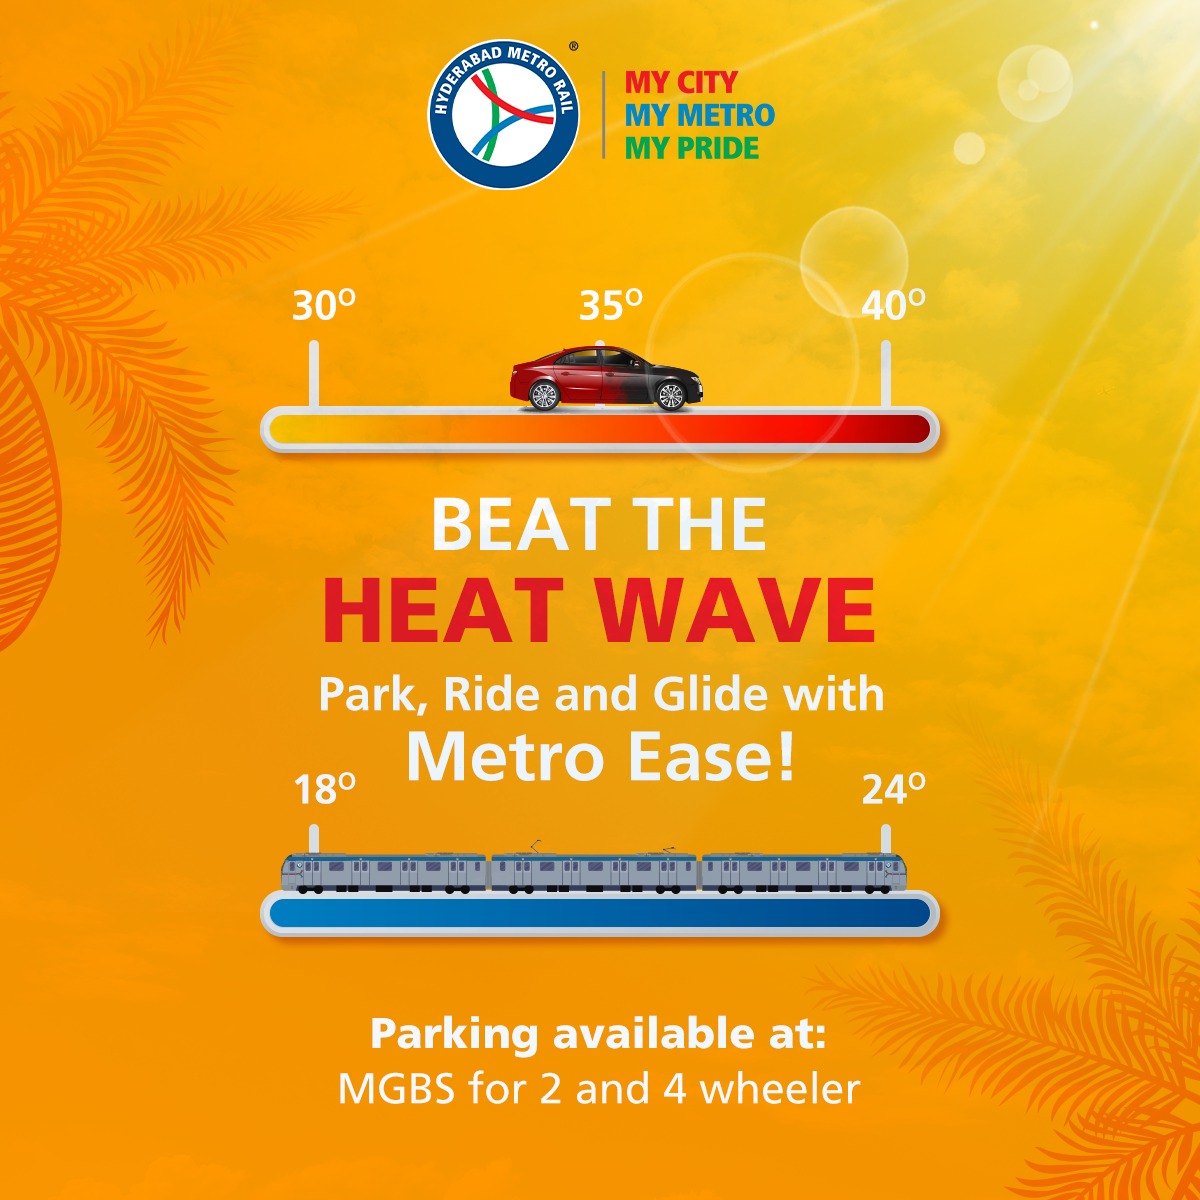 Stay cool this summer! Park your wheels at MGBS and breeze through the city with Metro Ease. Beat the heat hassle-free!
#landtmetro #mycitymymetromypride #metroride #HyderabadMetro #MetroRail #metrostation #publictransport #BeatTheHeatTakeTheMetro